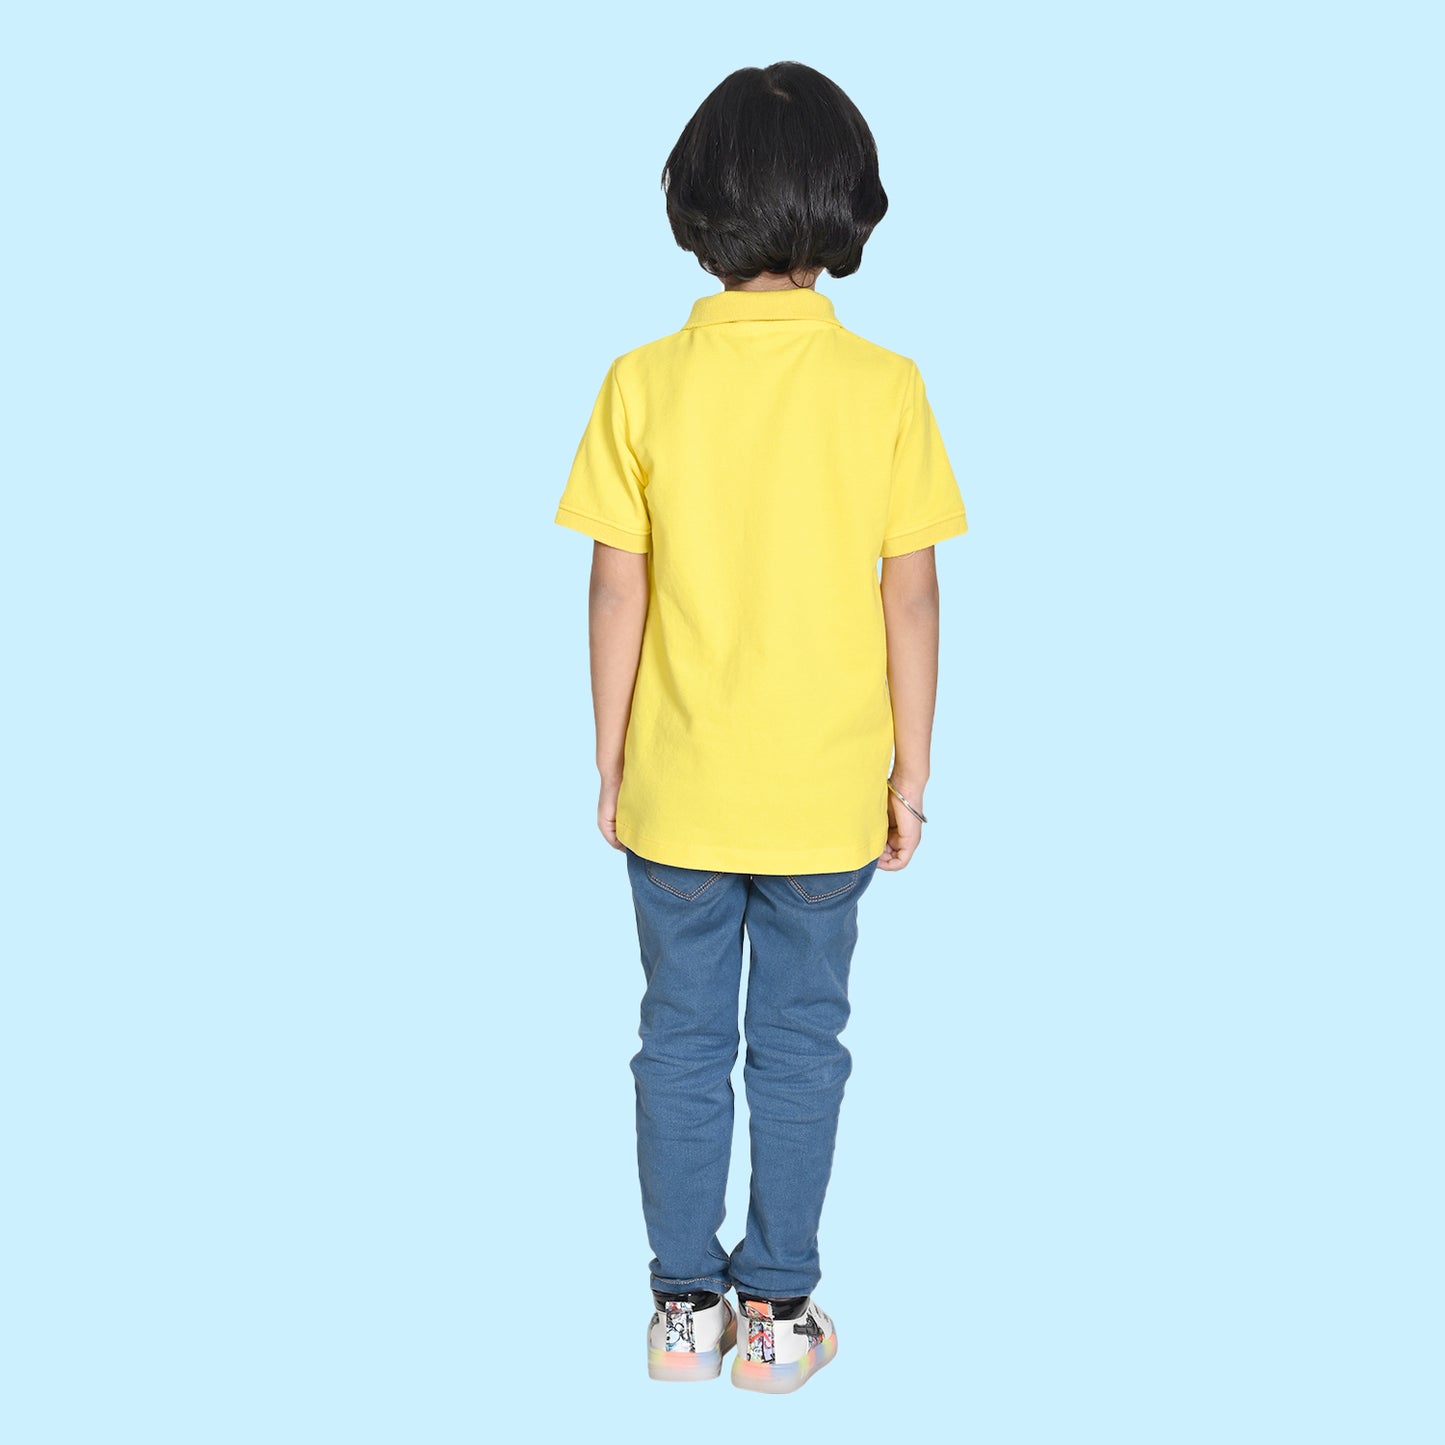 Nusyl solid bright yellow boys polo t-shirt